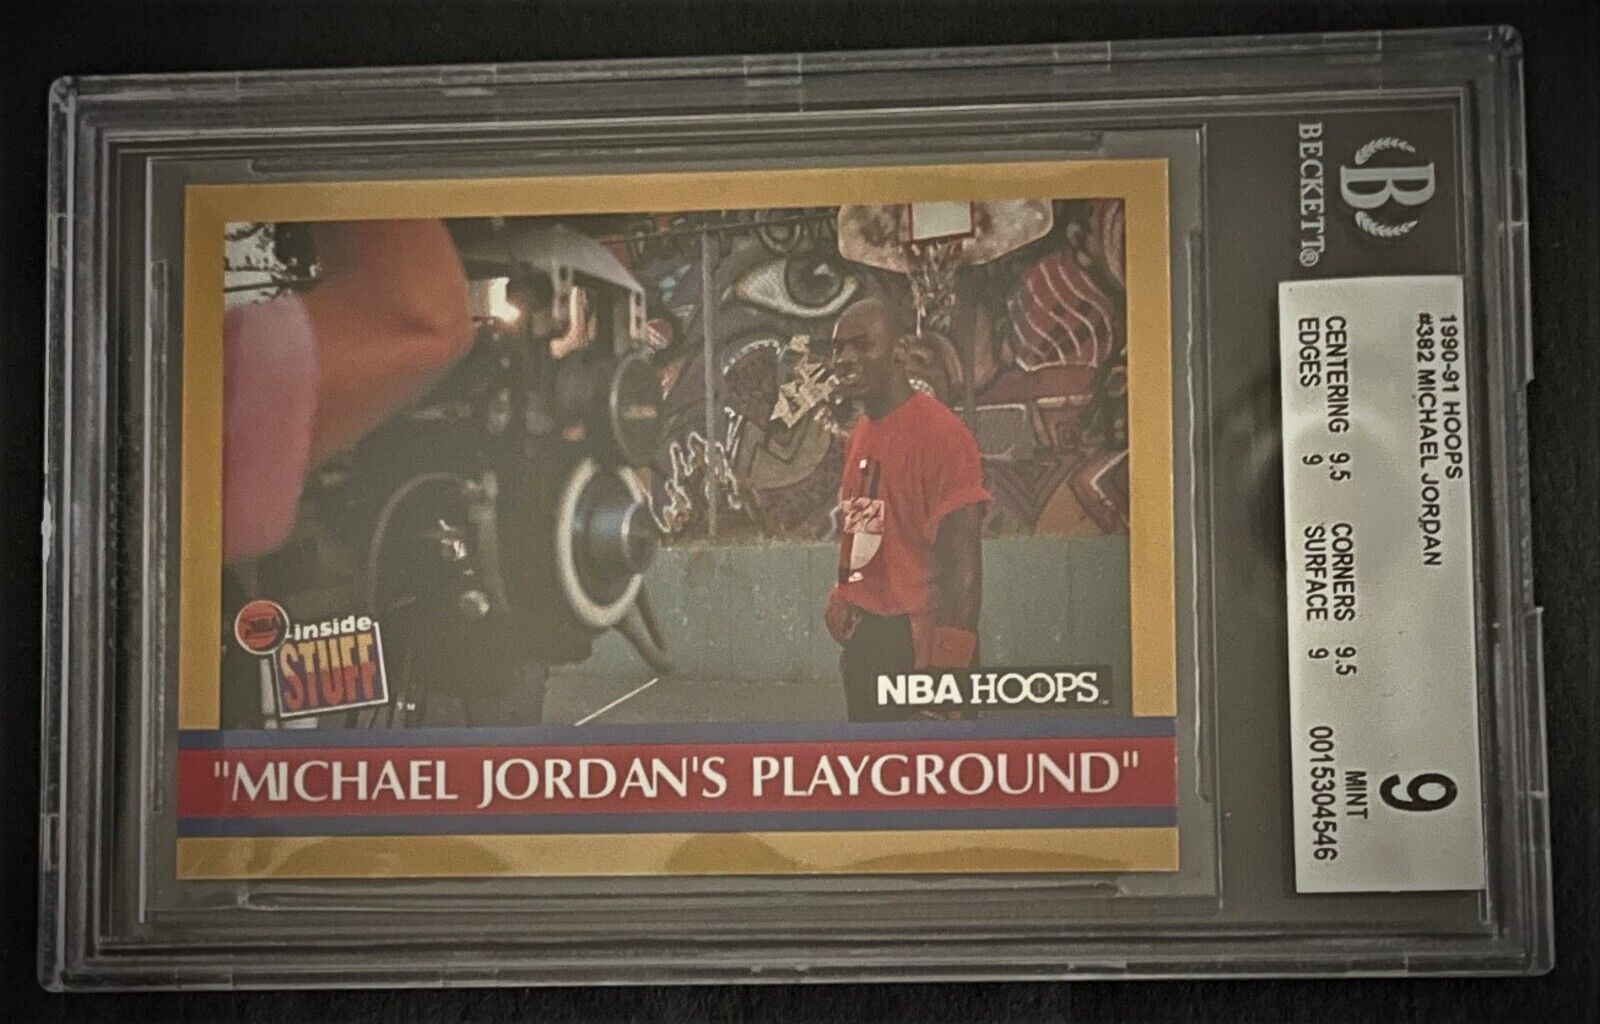 1990-91 Hoops #382 Michael Jordan BGS 9 w/ 9.5 CENTER&CORNERS CRISP "PLAYGROUND"